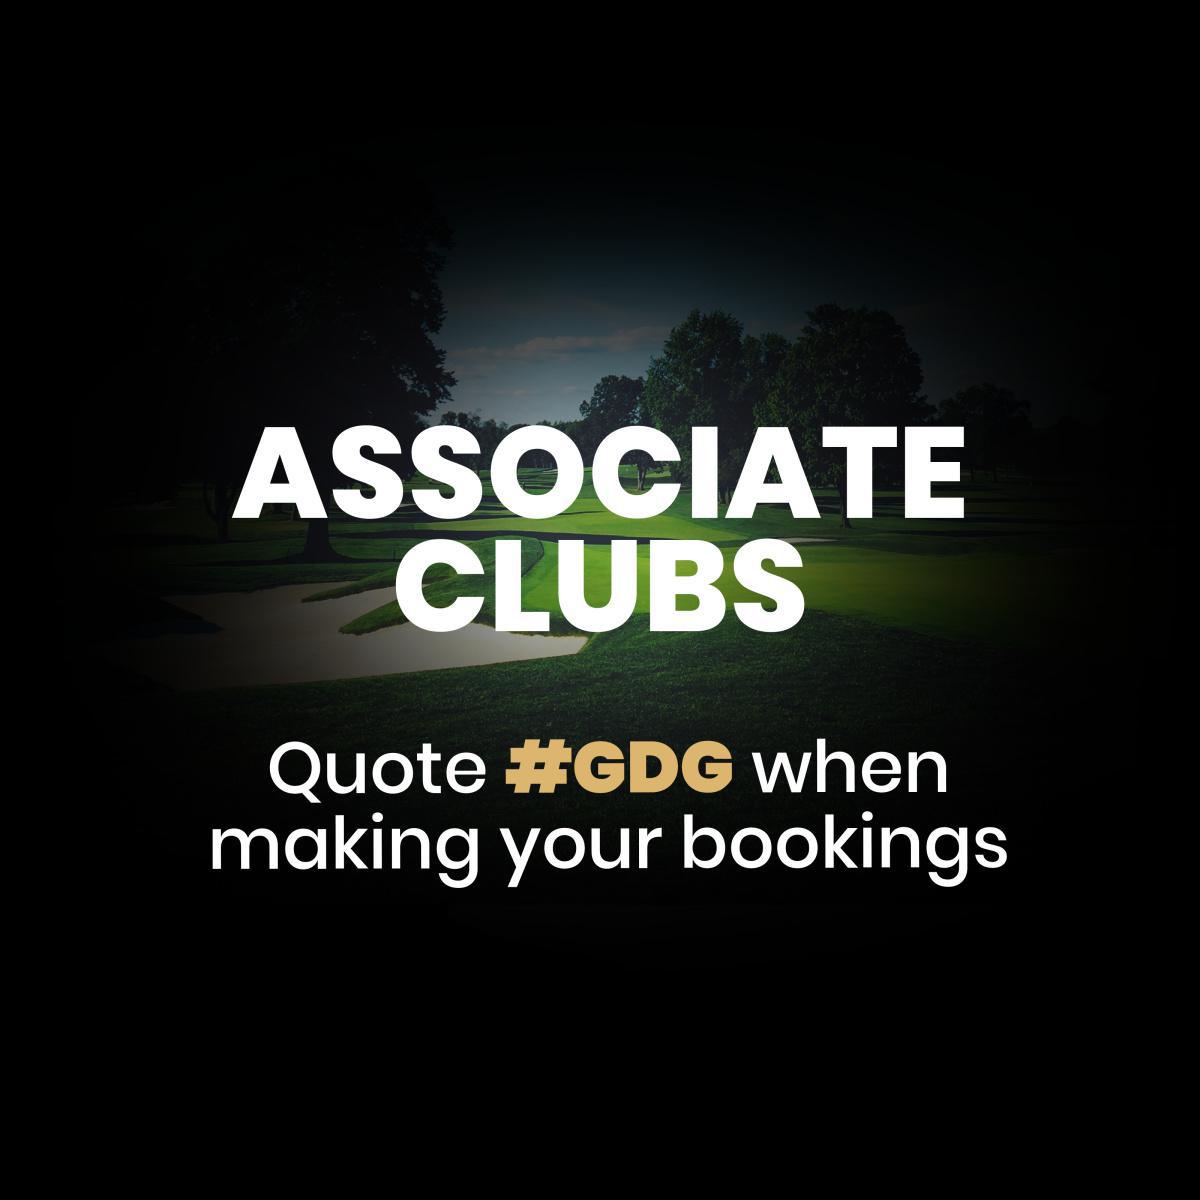 About Associate Clubs